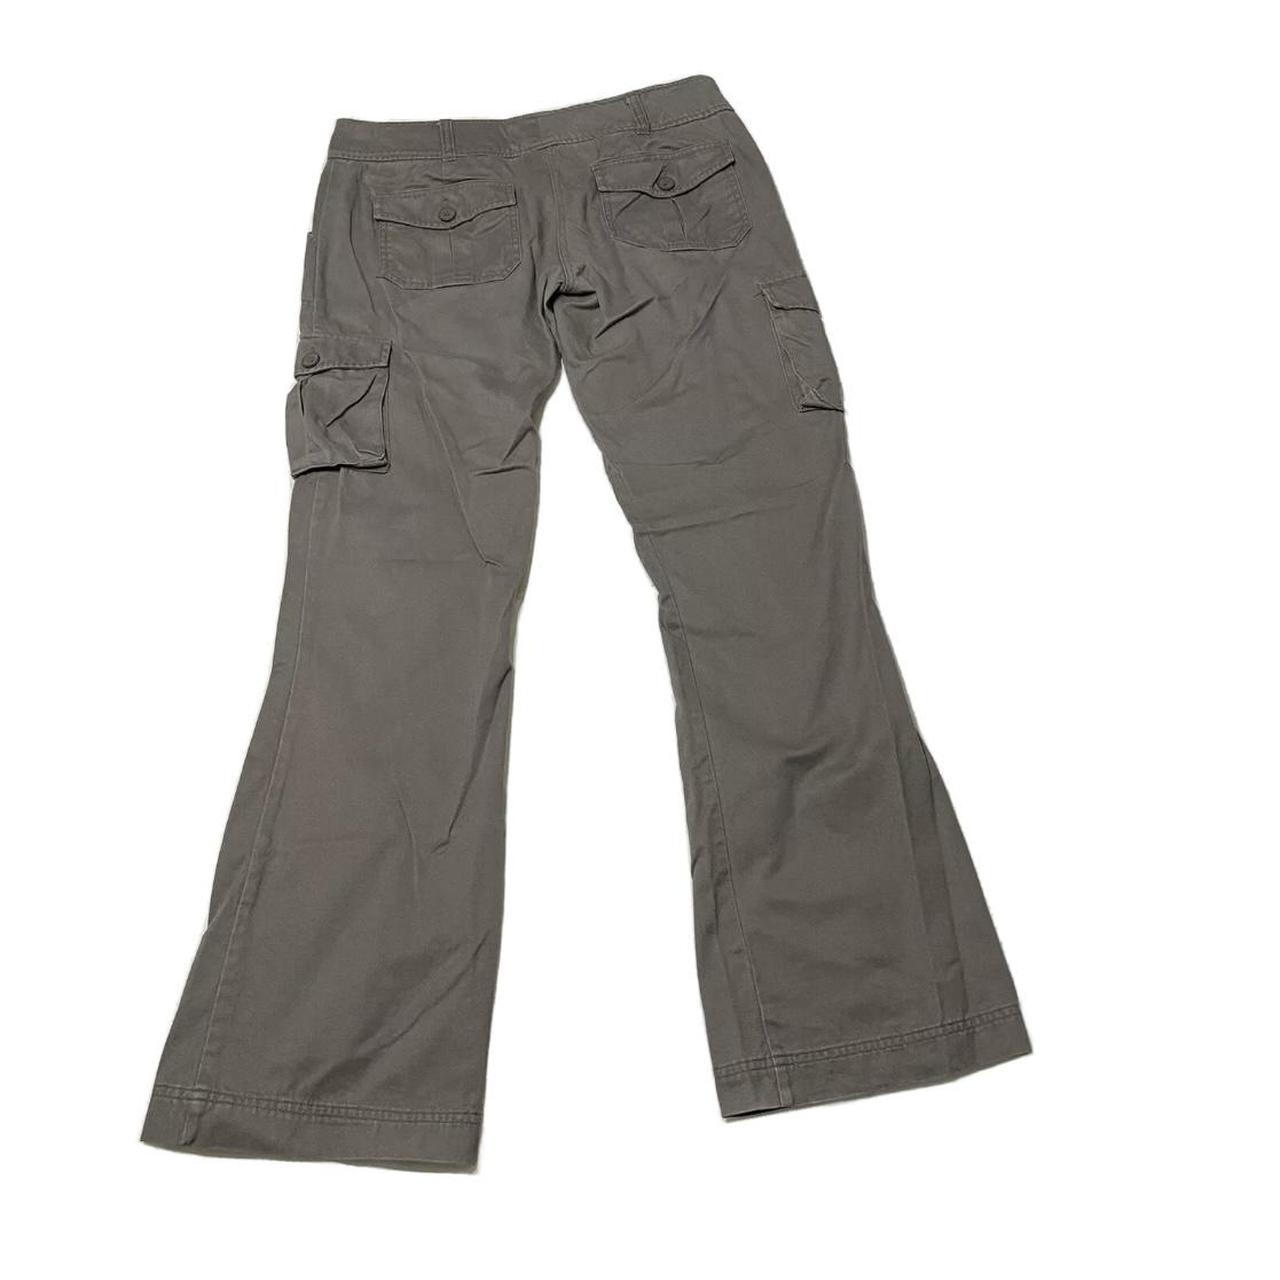 Product Image 2 - Grey Tactical Utility Cargo Pants